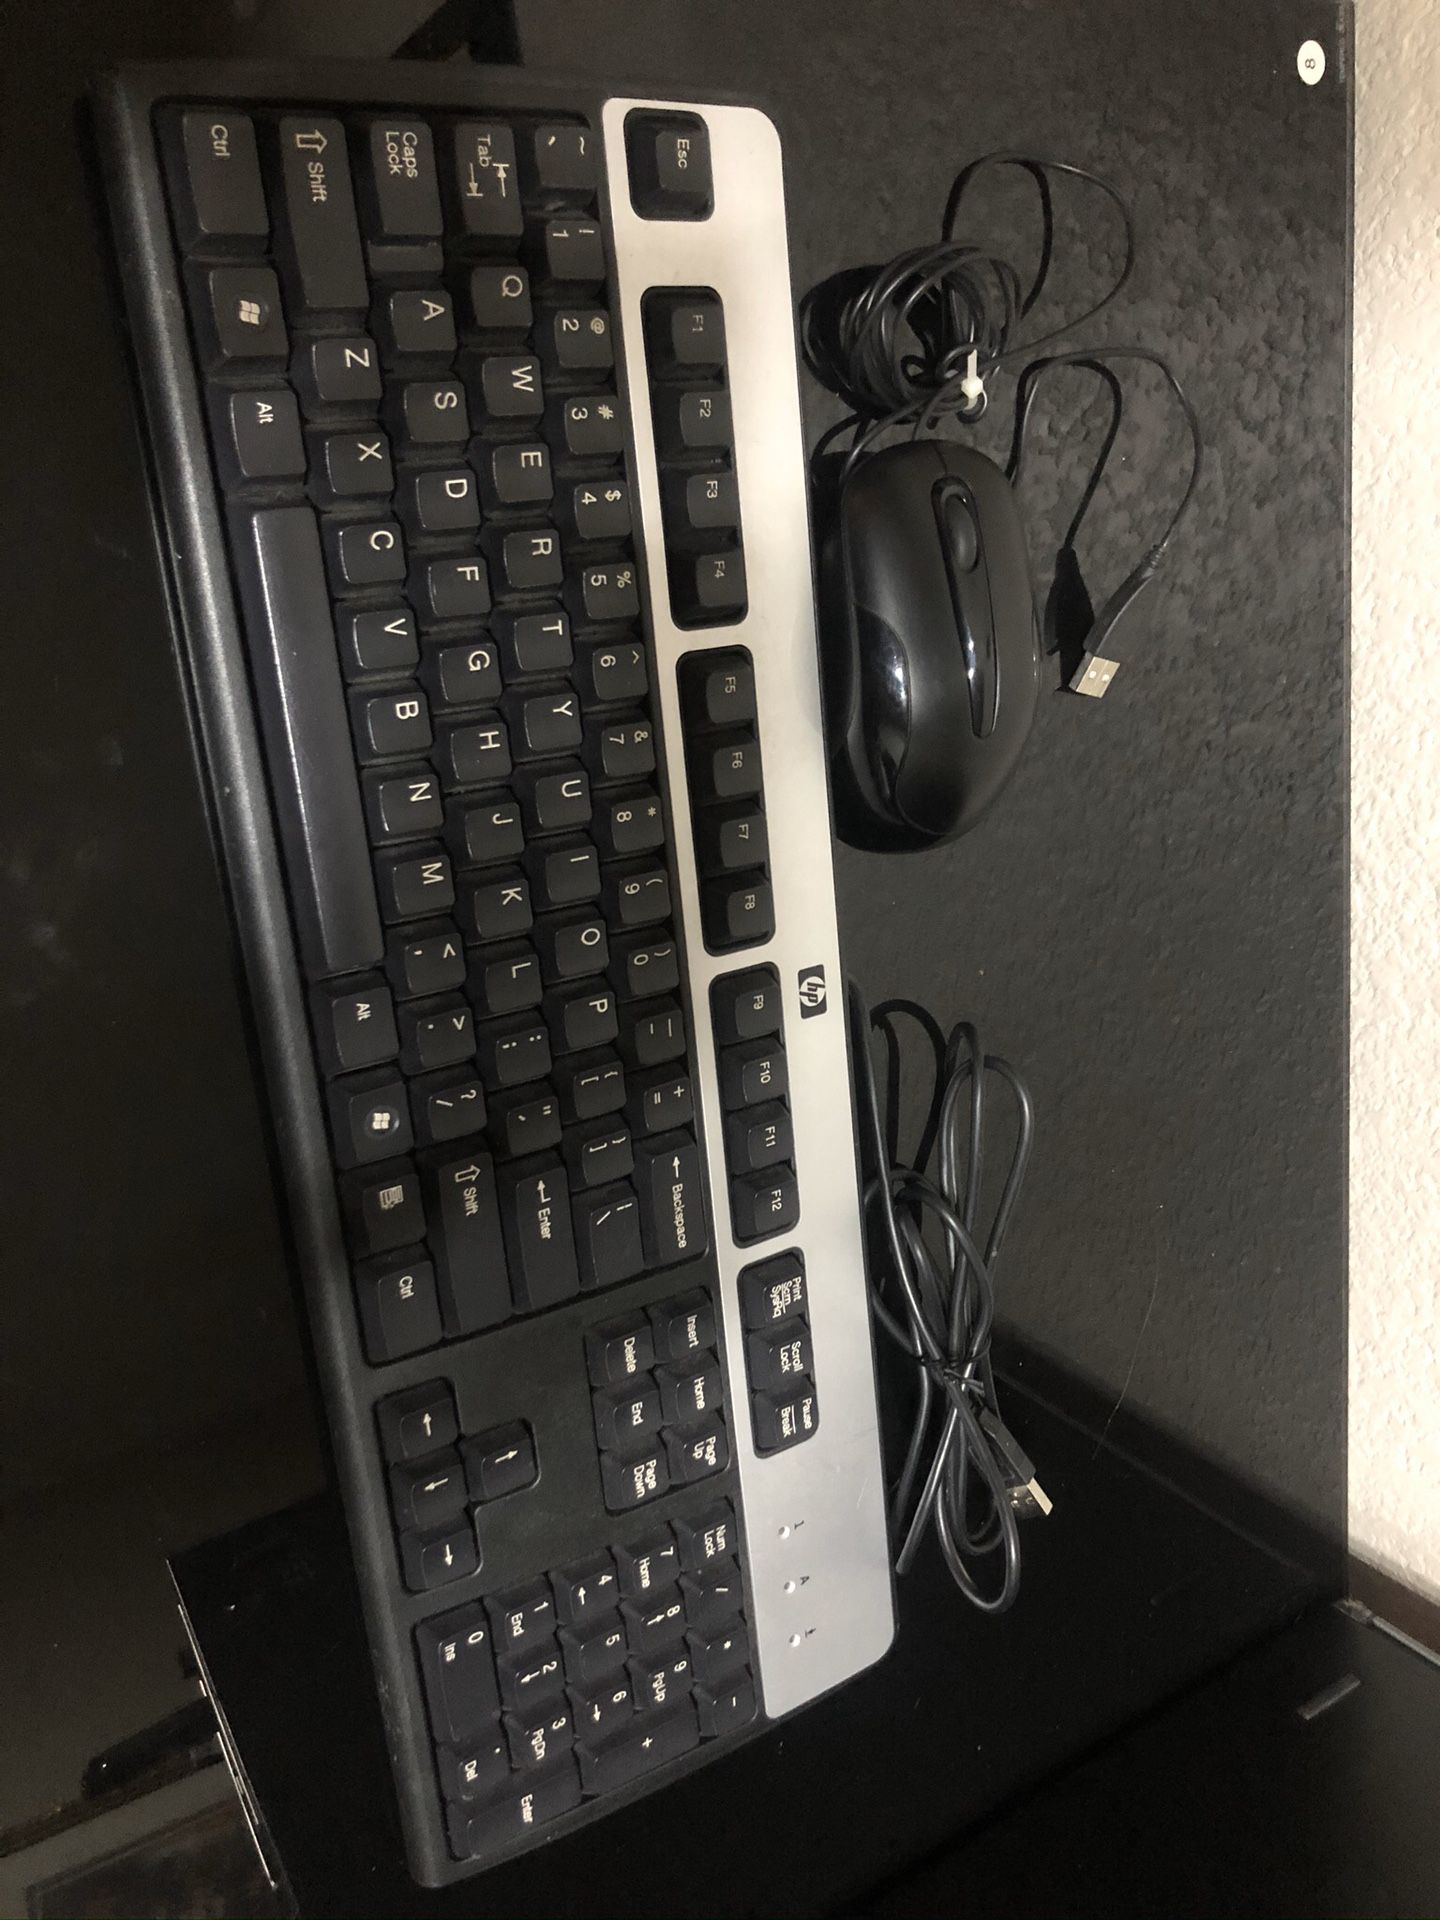 USB keyboard & mouse